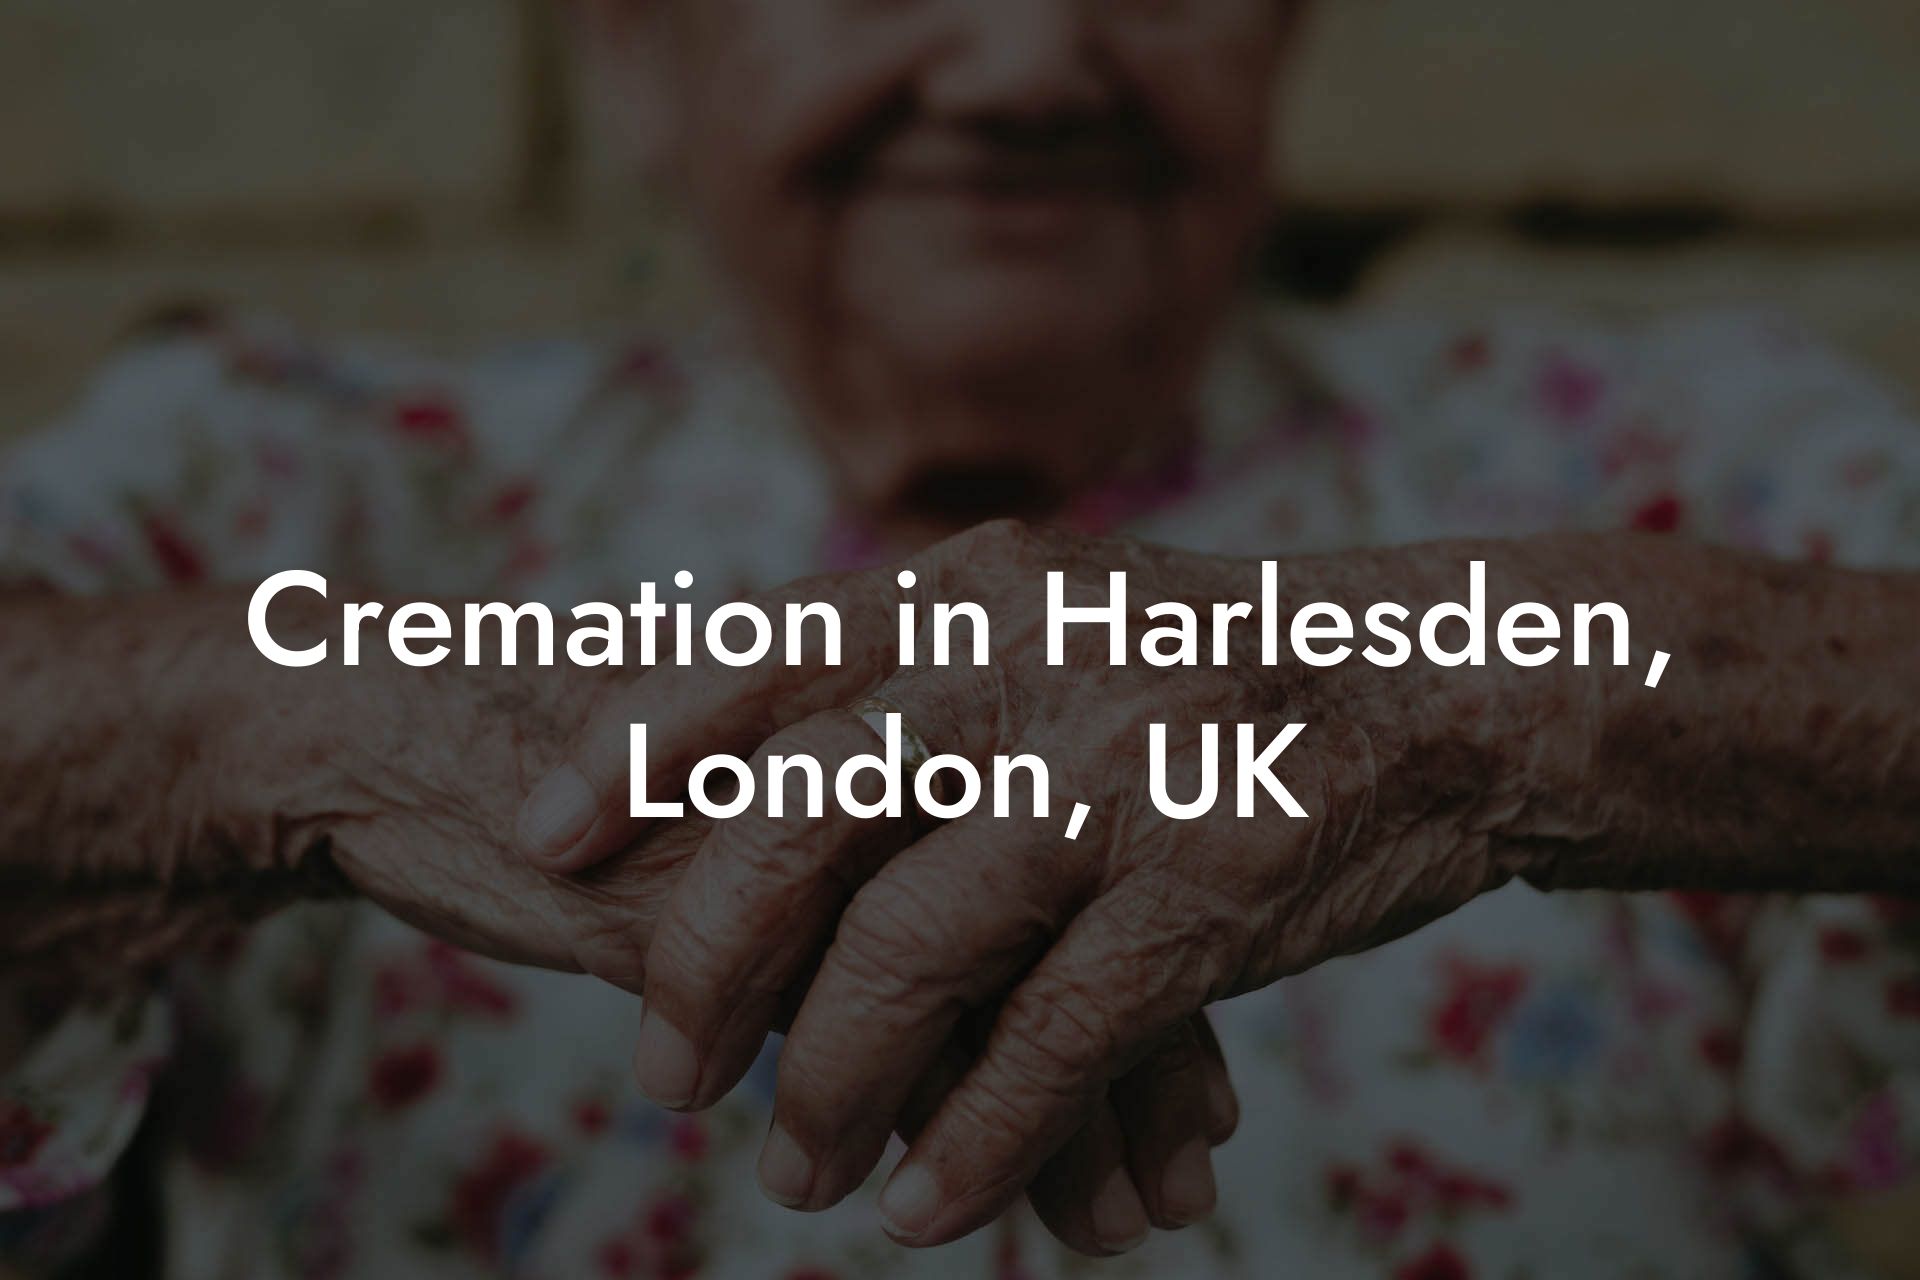 Cremation in Harlesden, London, UK